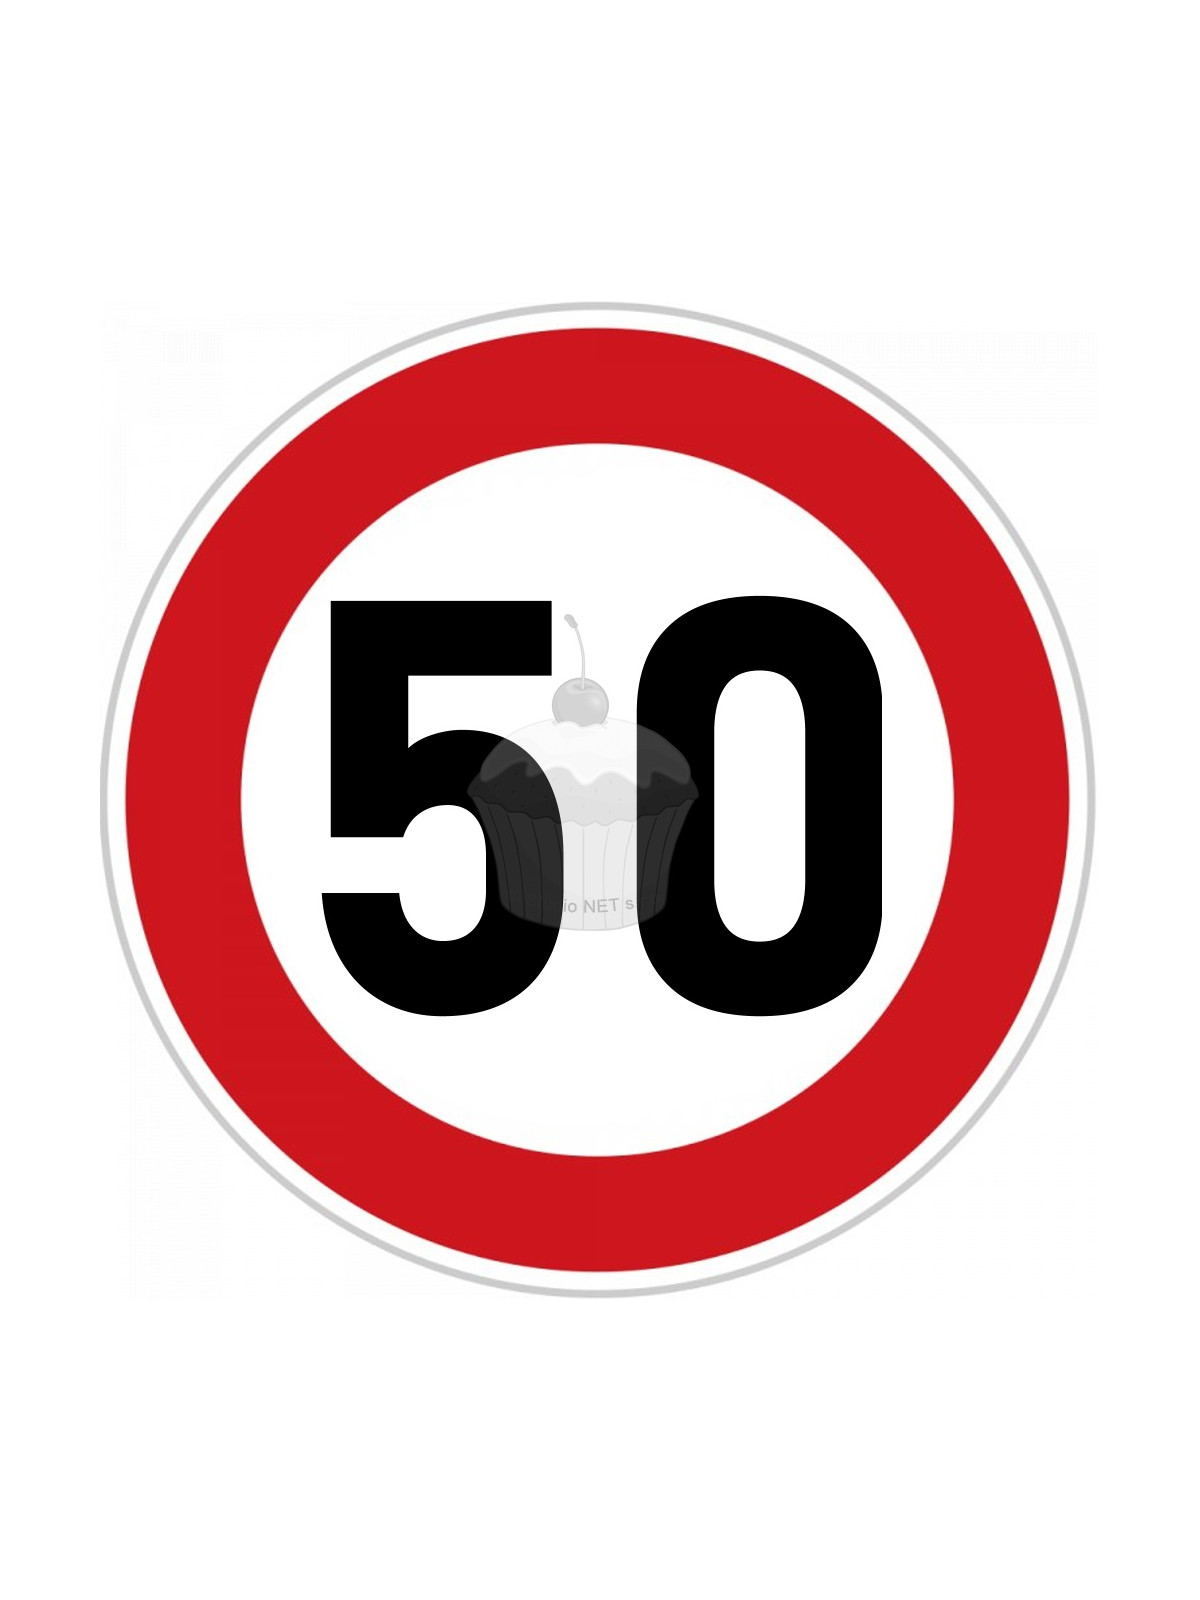 Edible paper "50th Birthday" ban sign A4